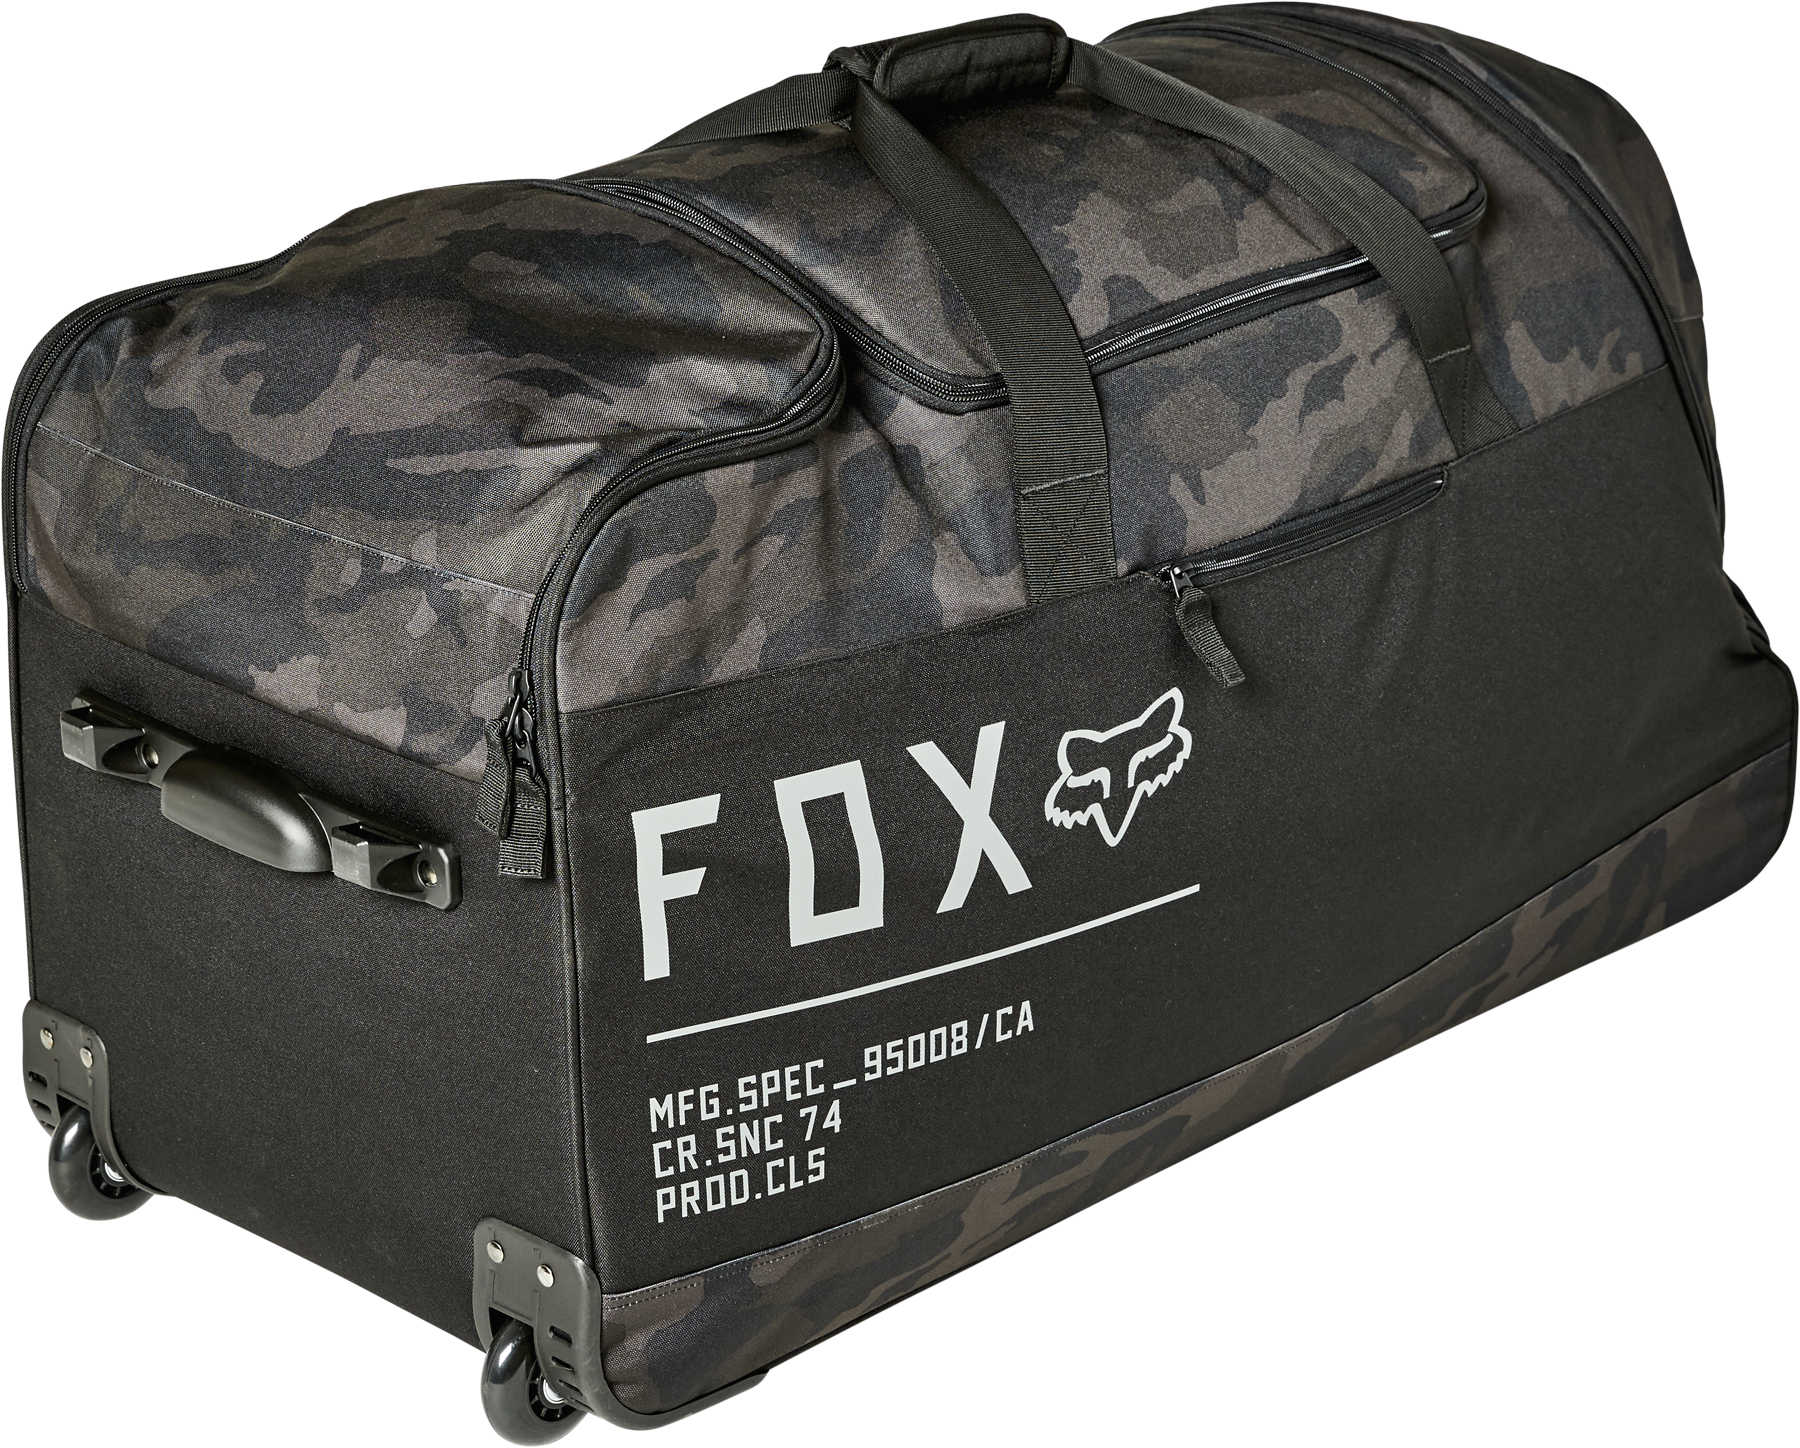 fox racing bags shuttle 180 roller bags - bags